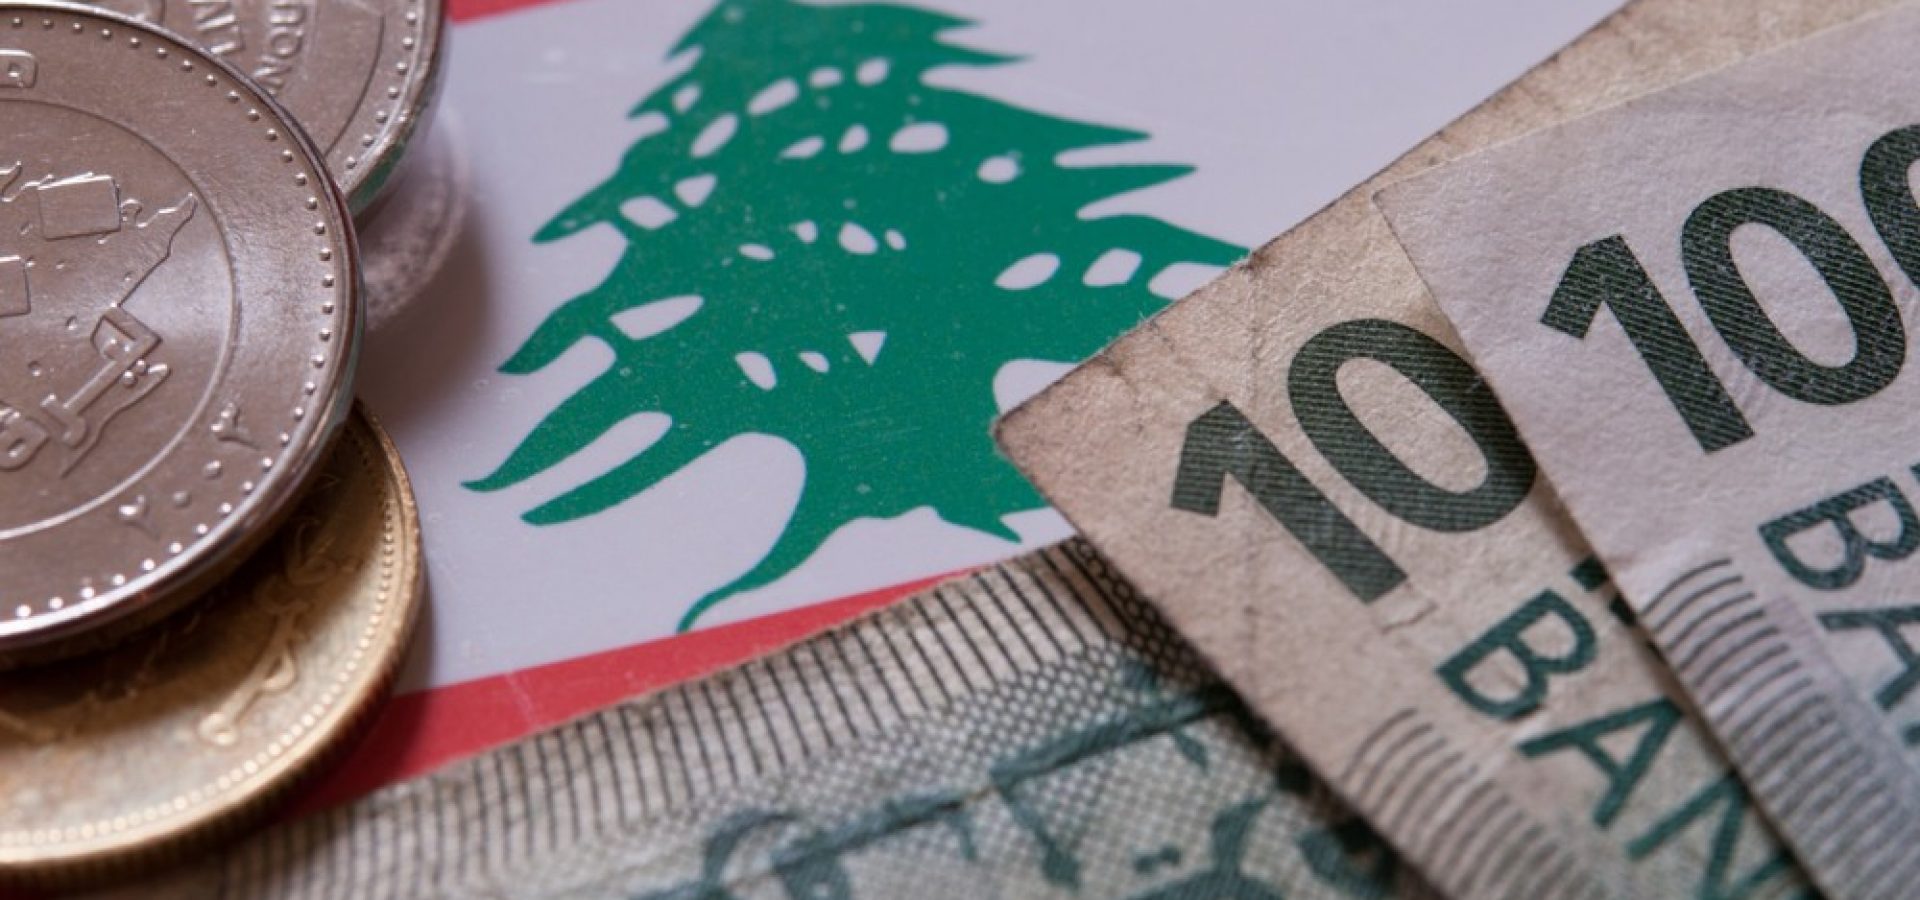 Wibest – Lebanese: The Lebanese pound coins and bills over Lebanon's flag.